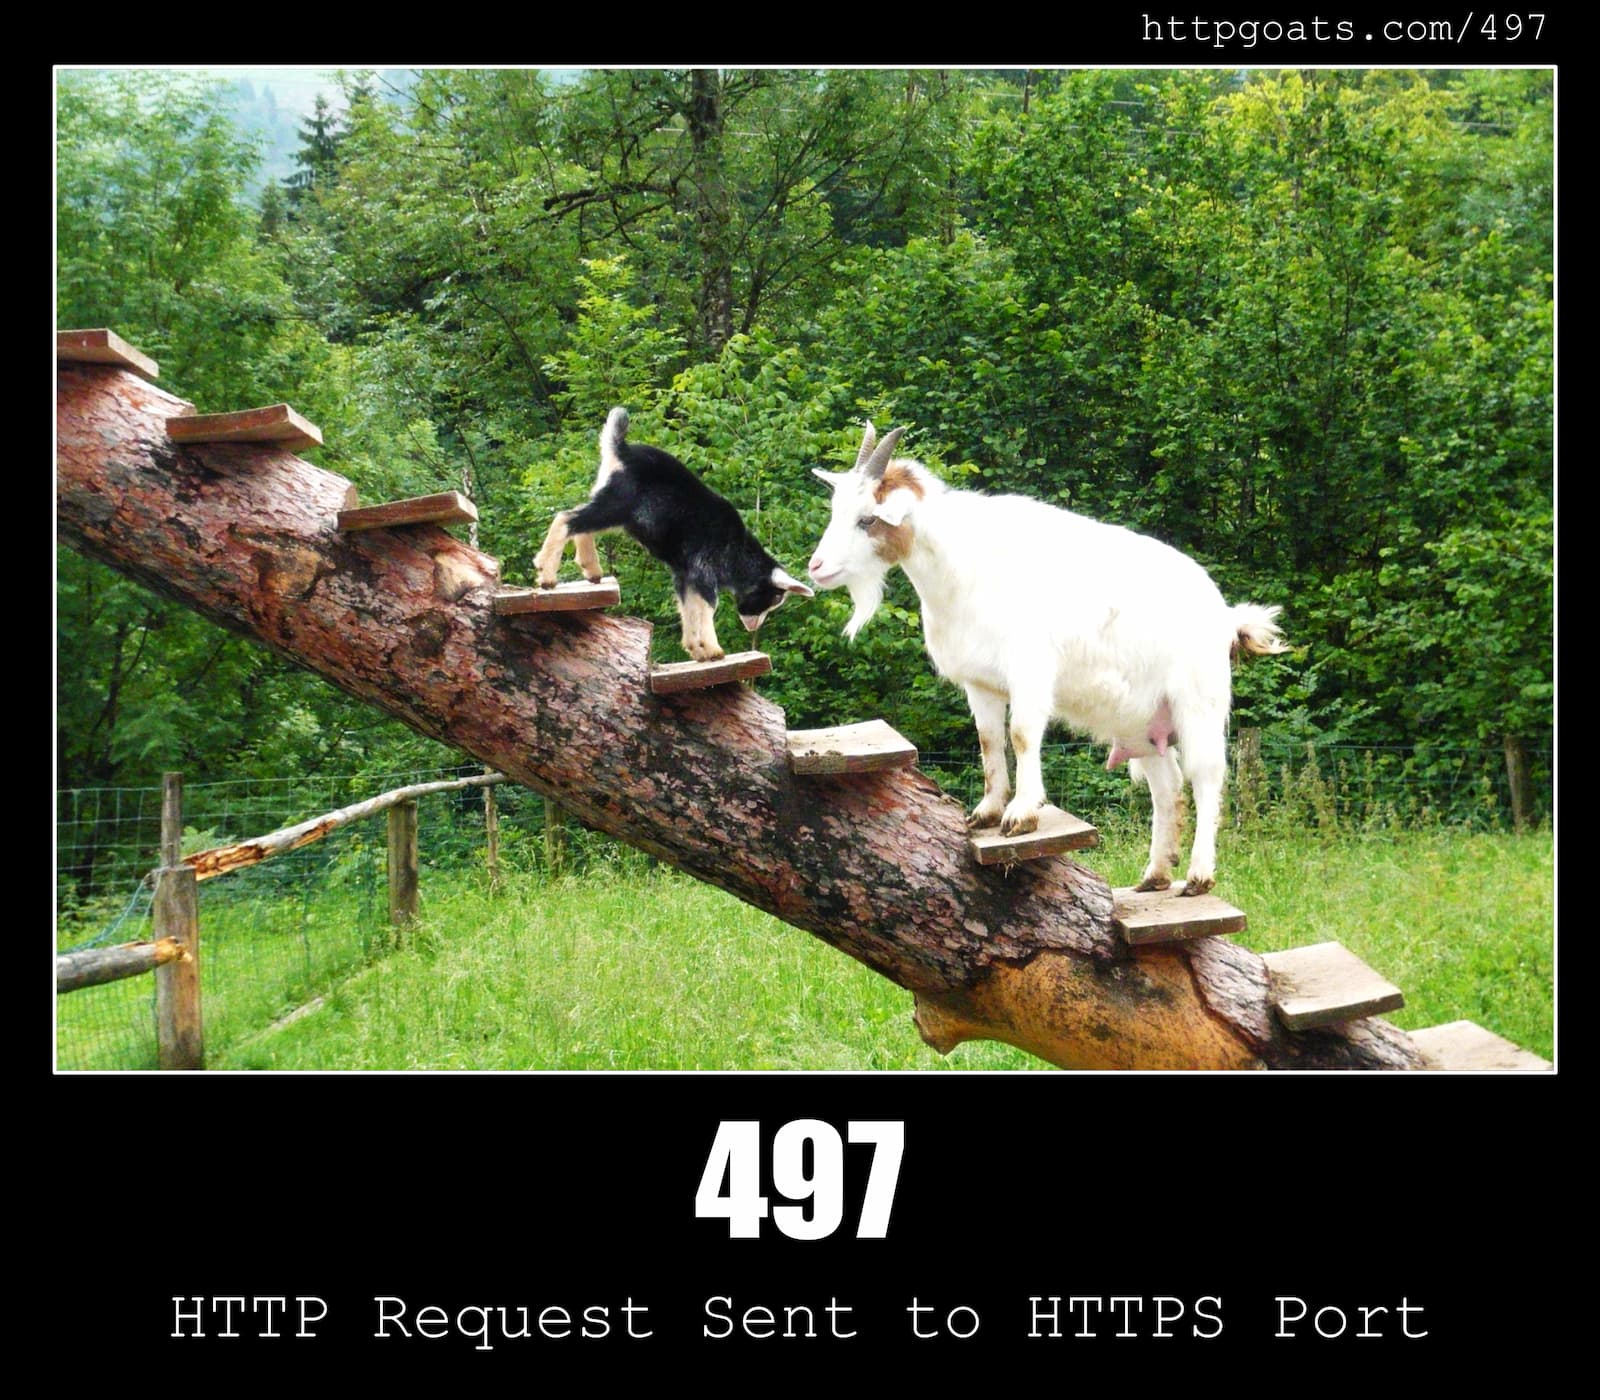 HTTP Status Code 497 HTTP Request Sent to HTTPS Port & Goats